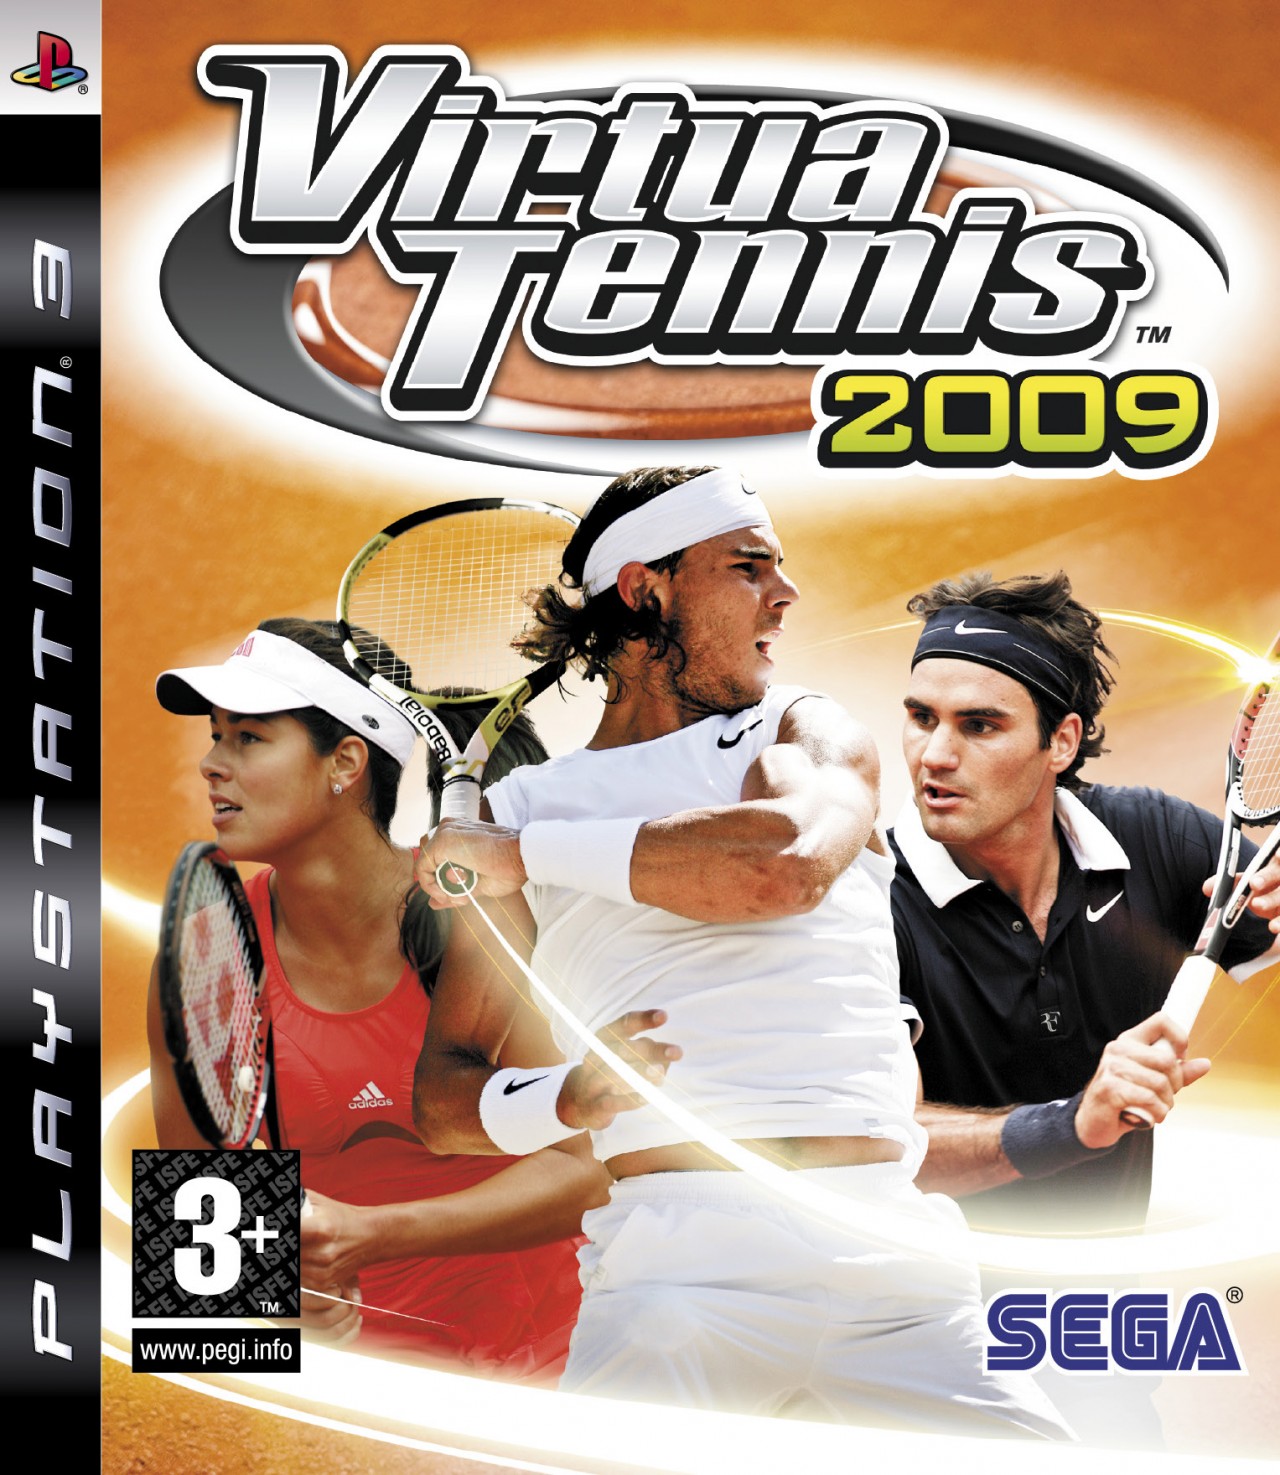 http://img.jeuxactu.com/datas/images/jeux/Virtua_Tennis_2009/packaging/xl/498b04d6050fd.jpg